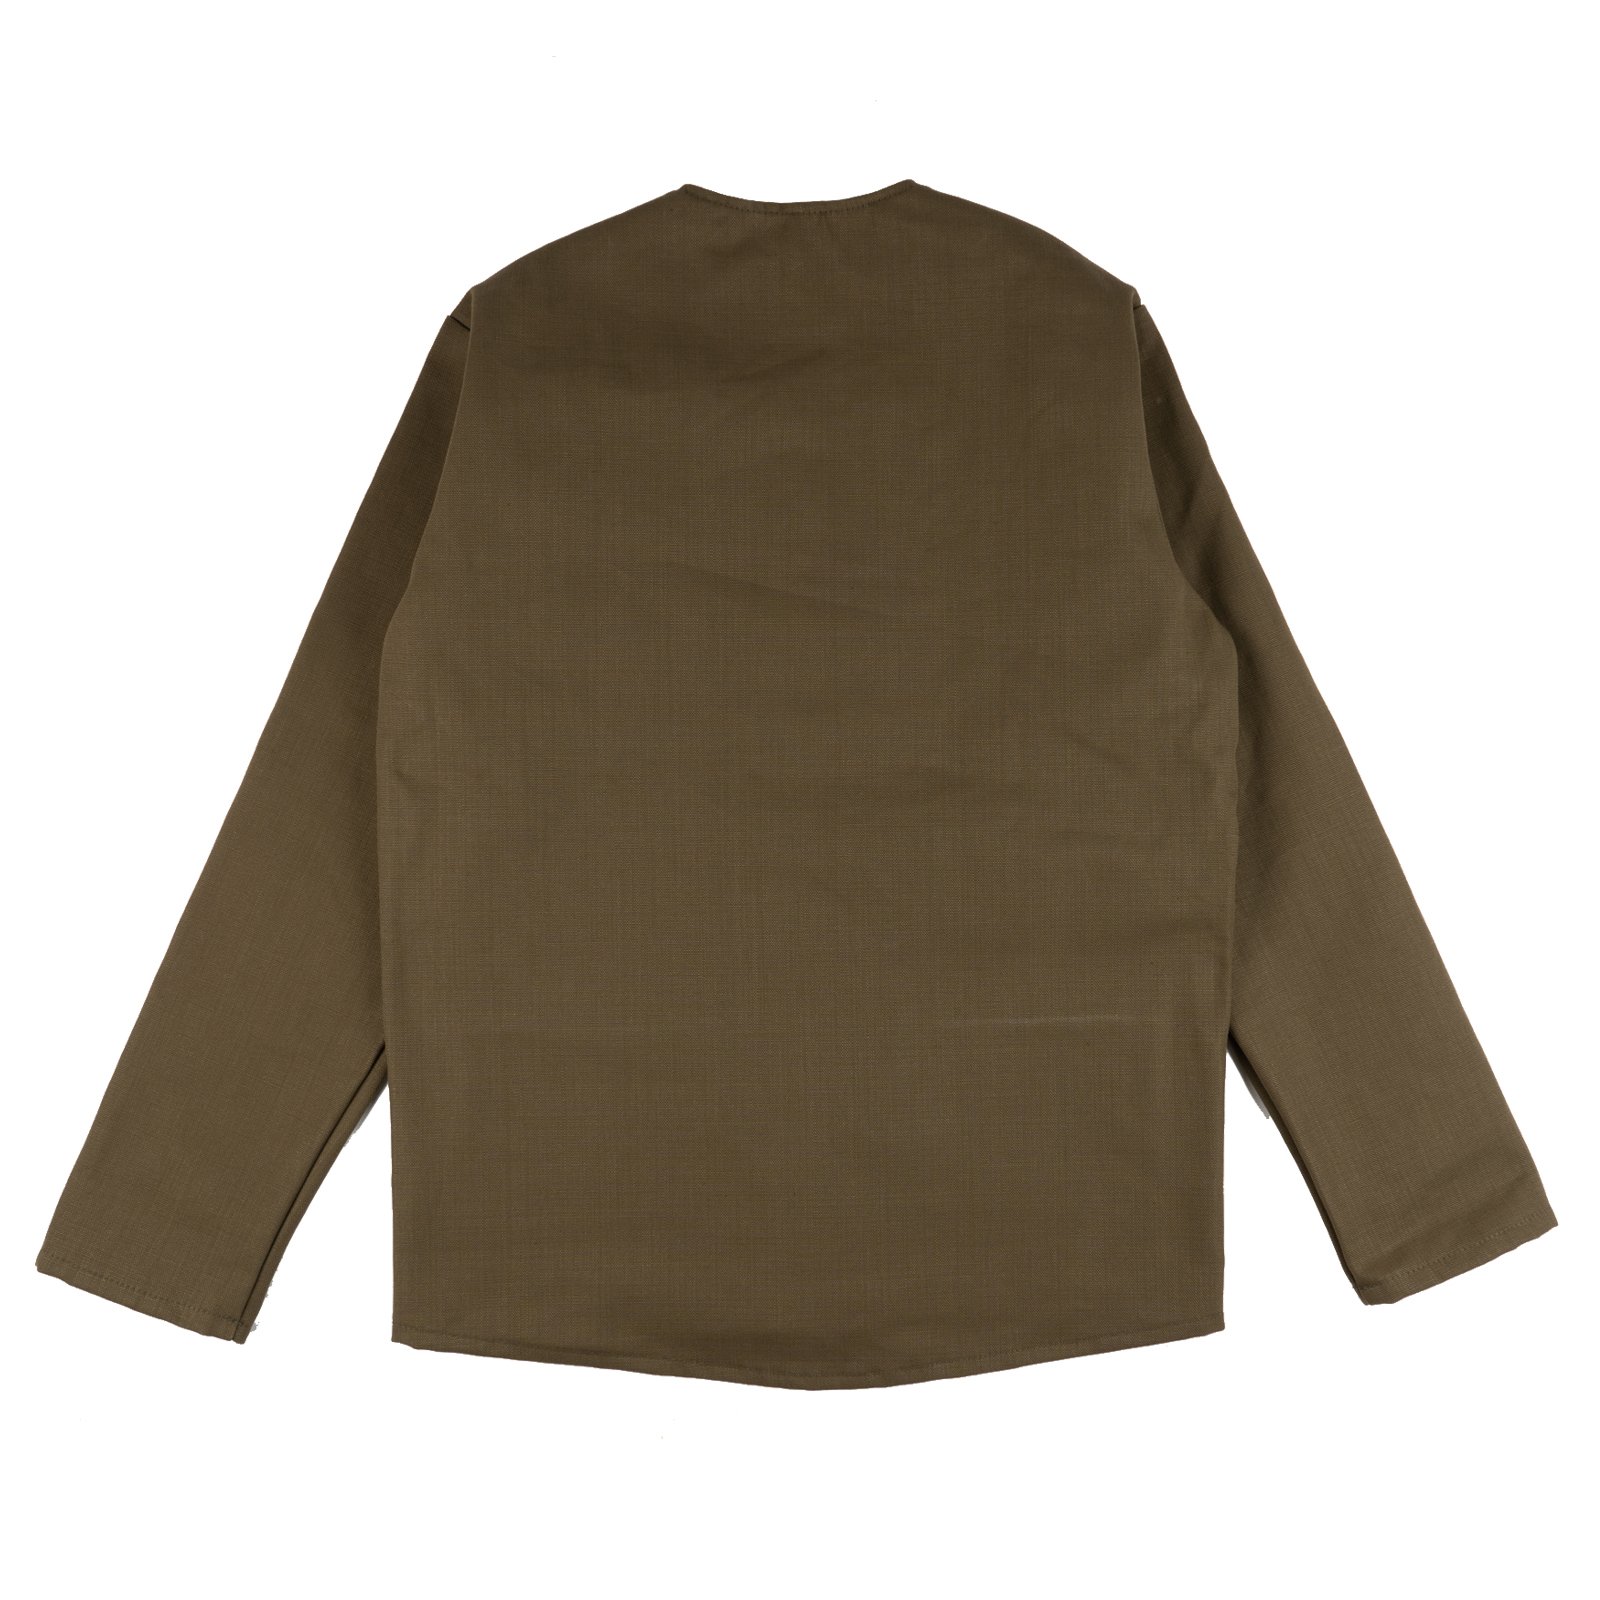  Smart Jacket - Raw Cotton Canvas - Olive - flat back 